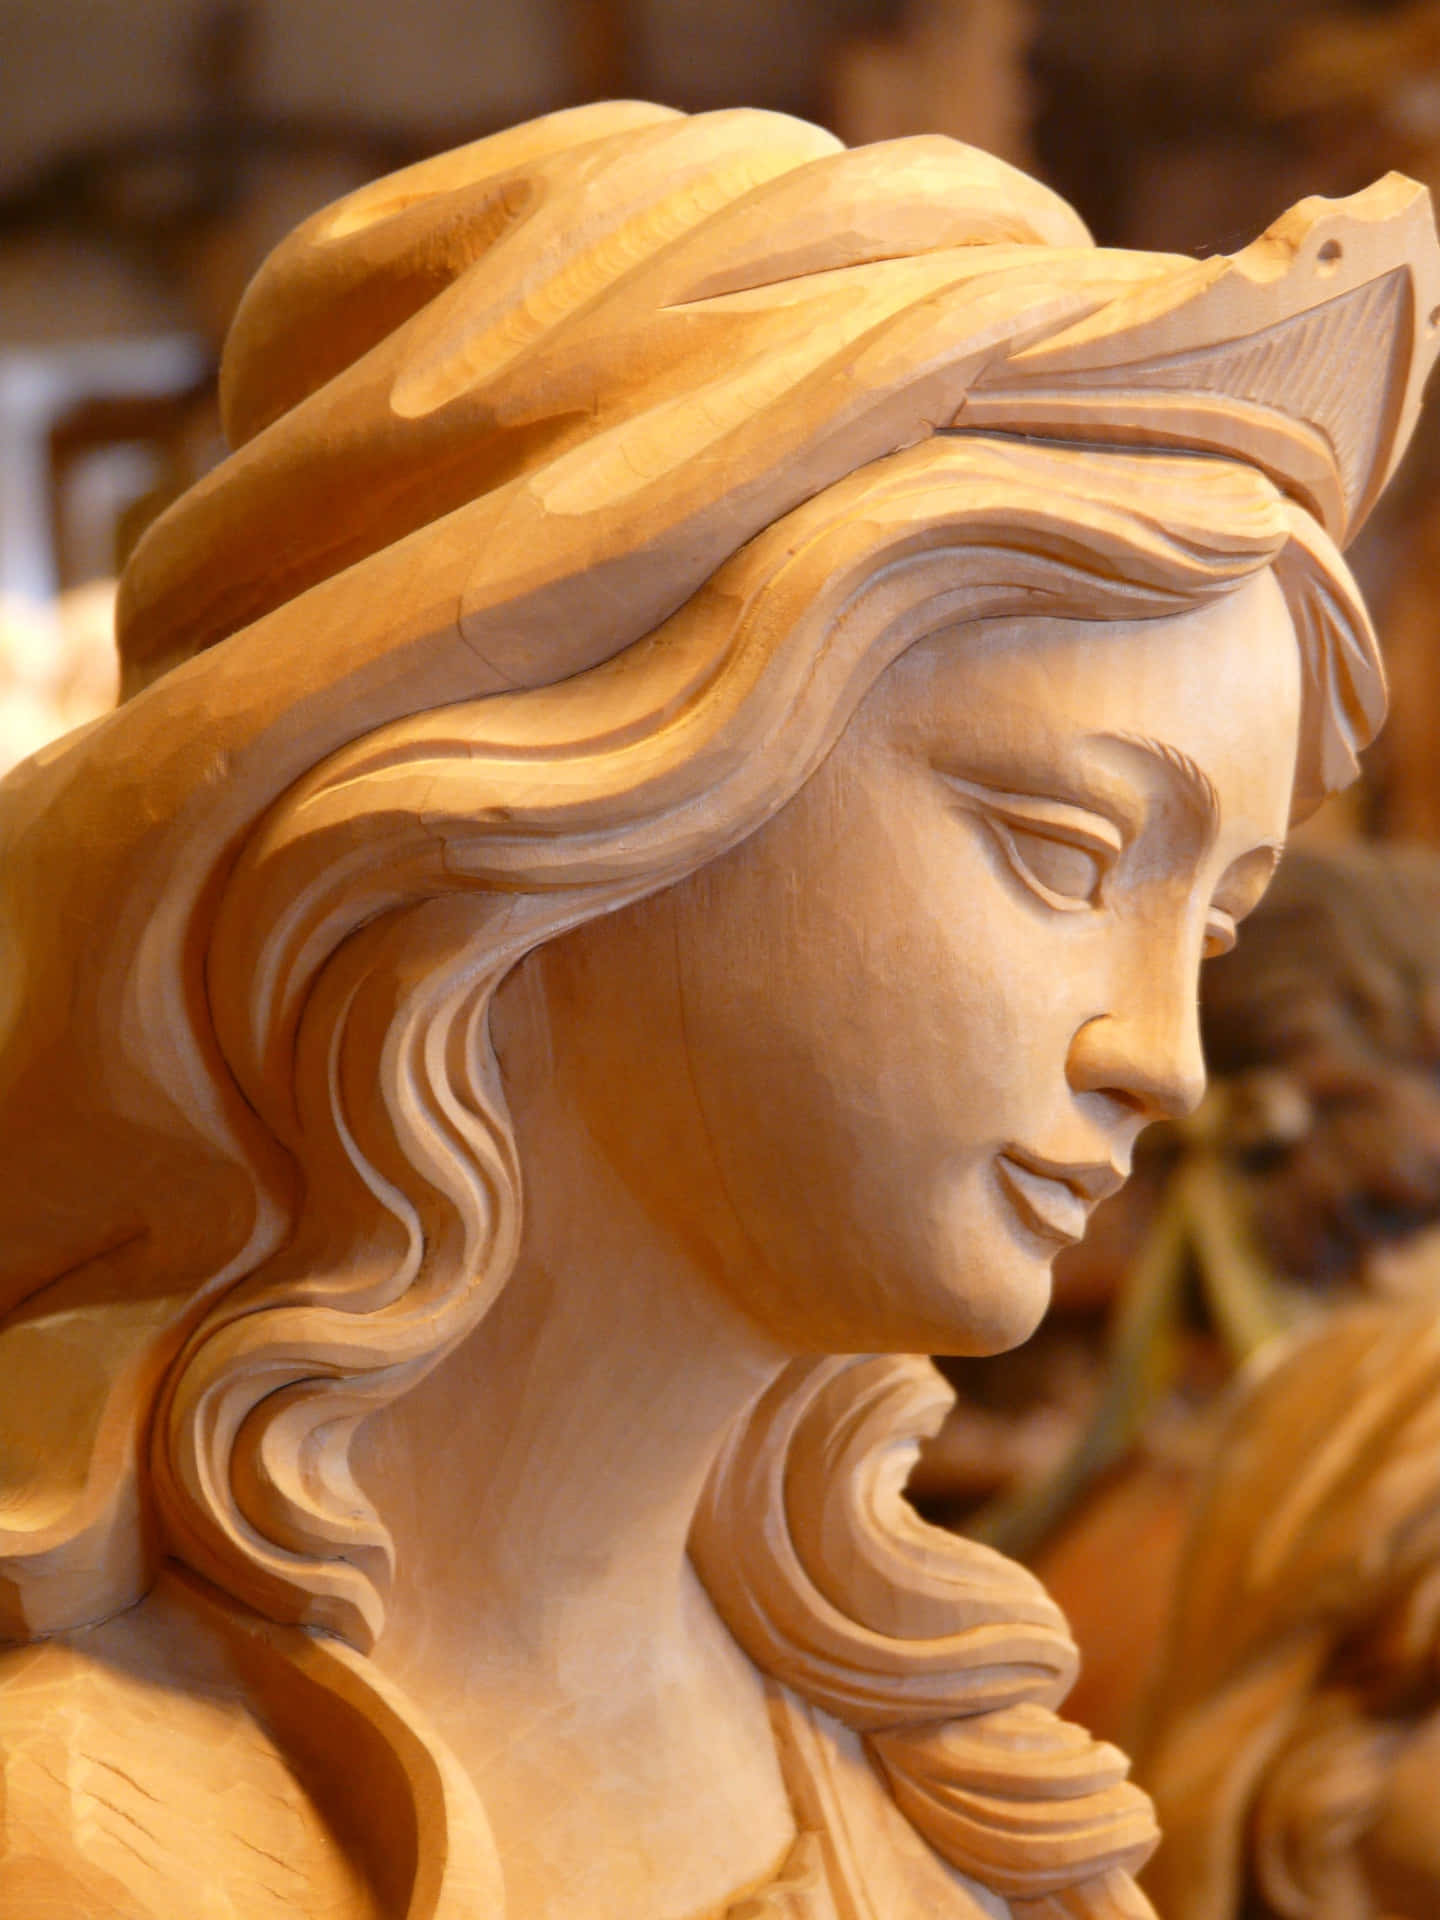 Wooden Sculpture Elegant Female Figure Wallpaper